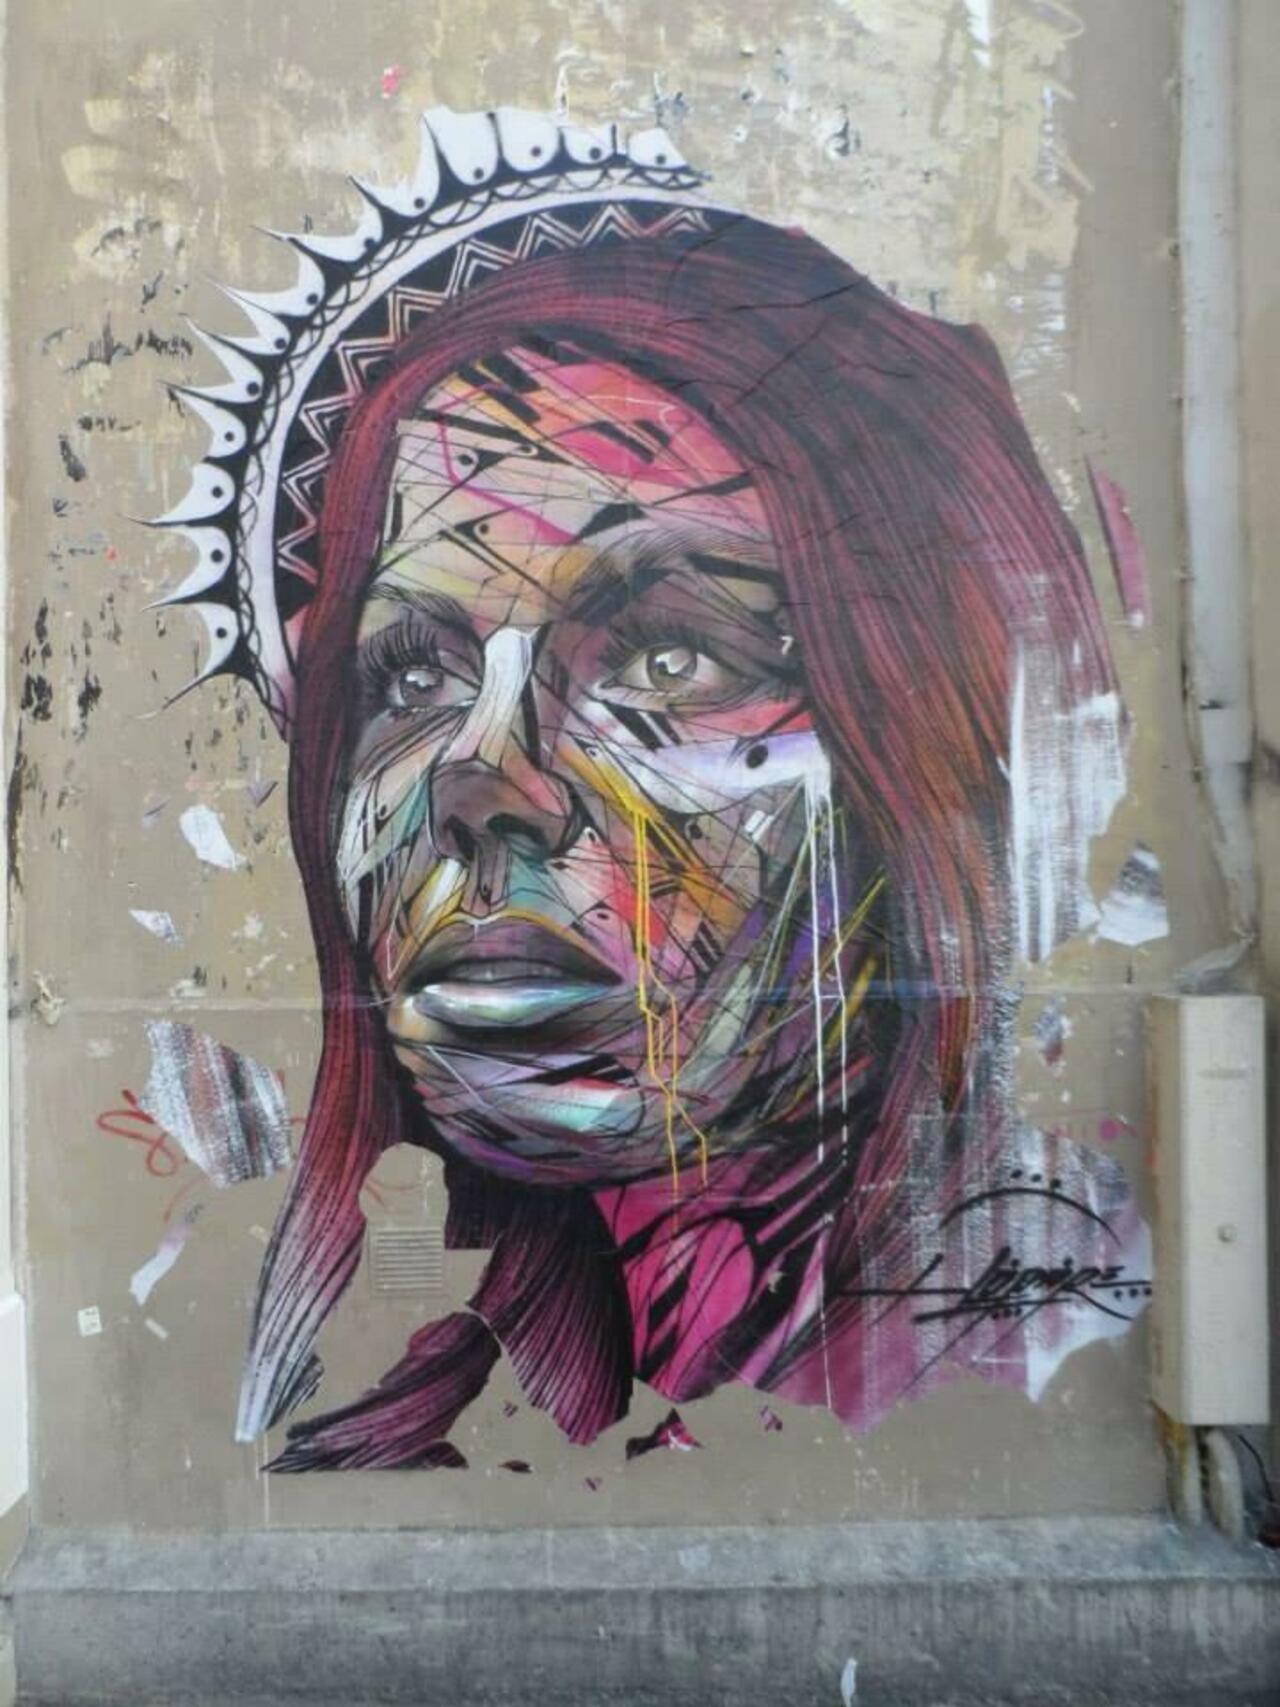 Artist Hopare new signature Street Art portrait located in Paris, France #art #mural #graffiti #streetart https://t.co/gofyMB52lP